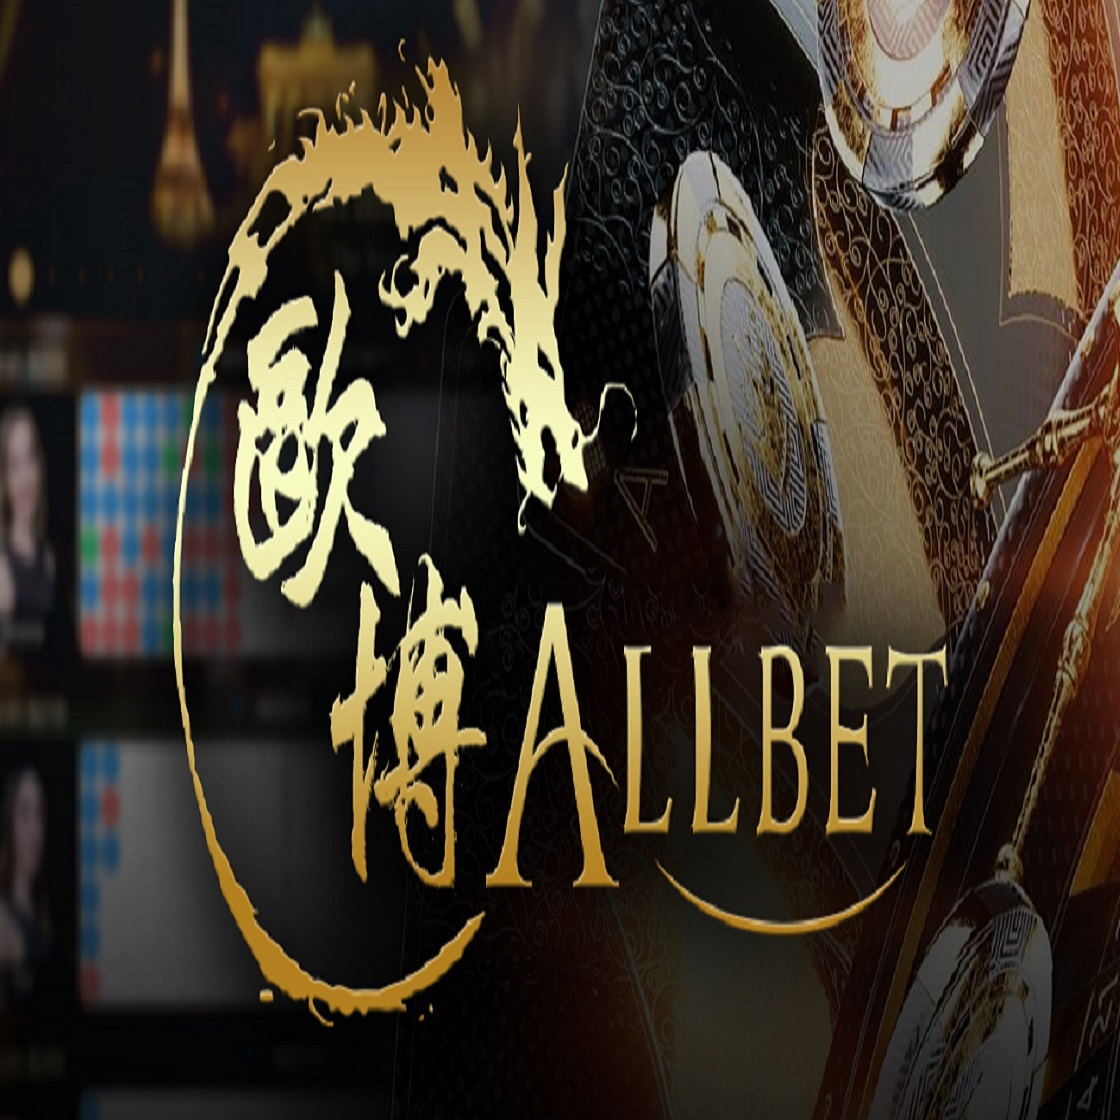 Allbet Live Casino